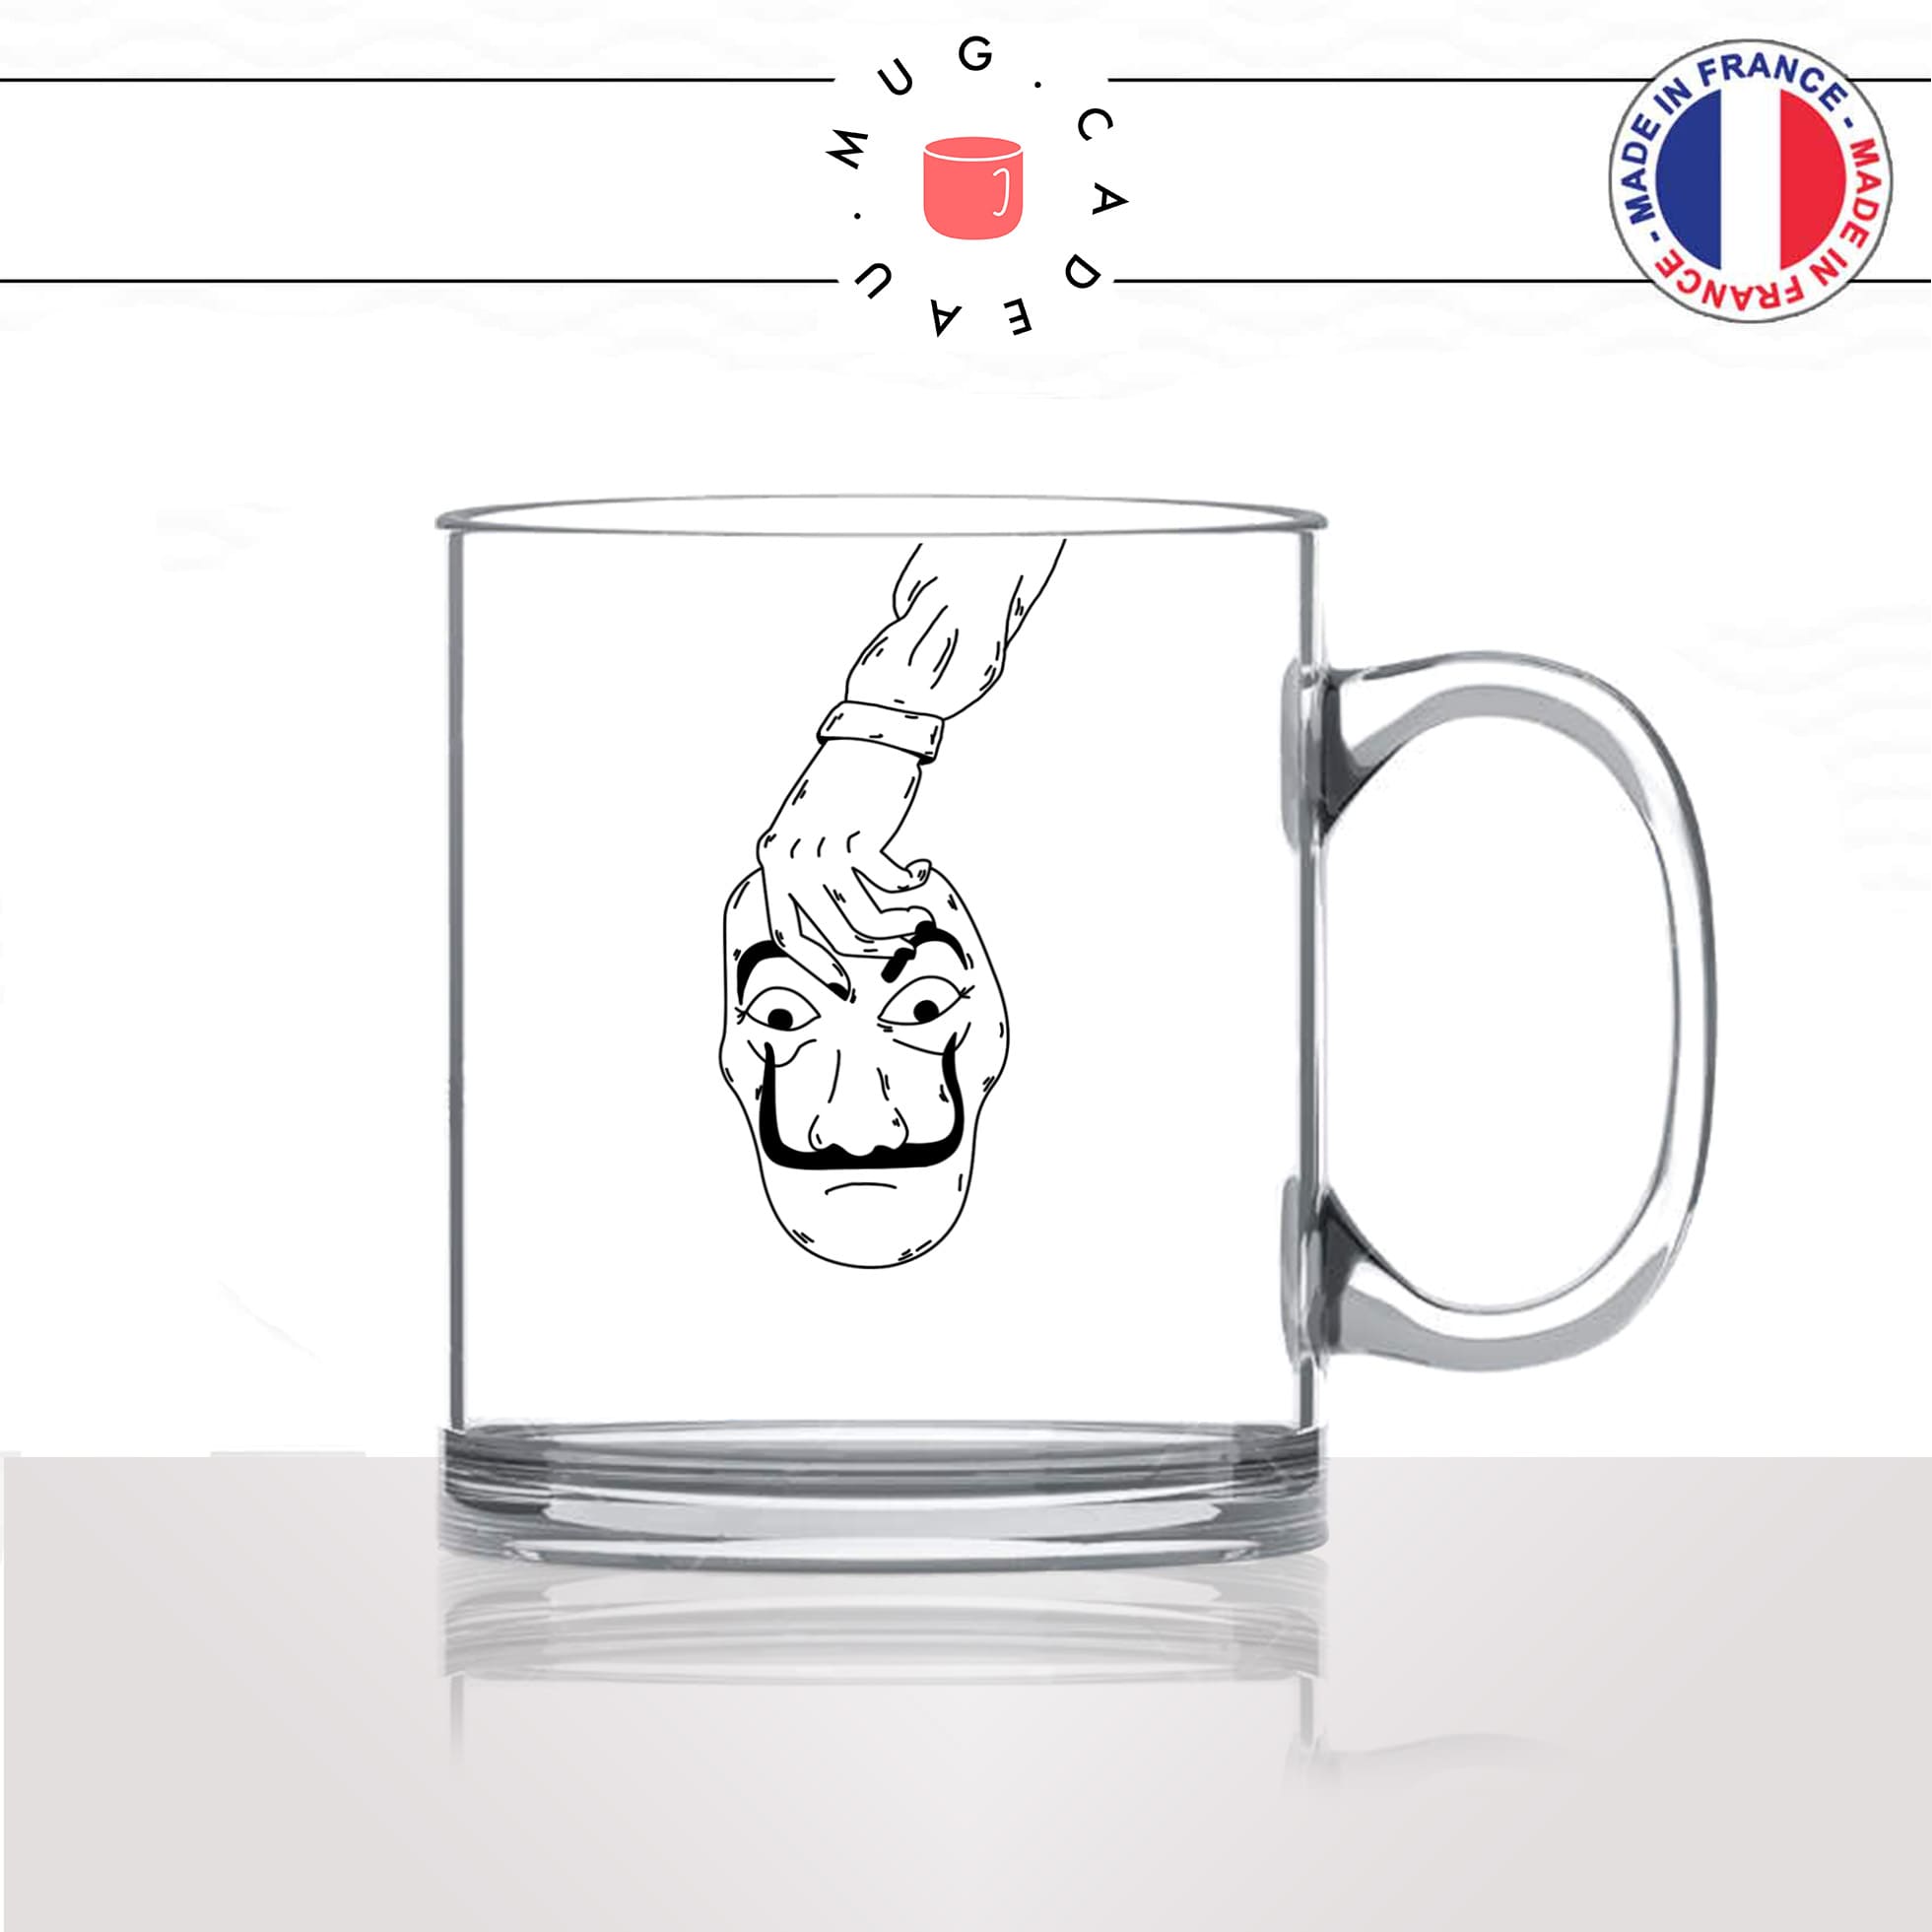 mug-tasse-en-verre-transparent-glass-série-la-casa-del-papel-espagnol-banque-masque-dali-tokyo-professeur-idée-cadeau-fun-cool-café-thé2